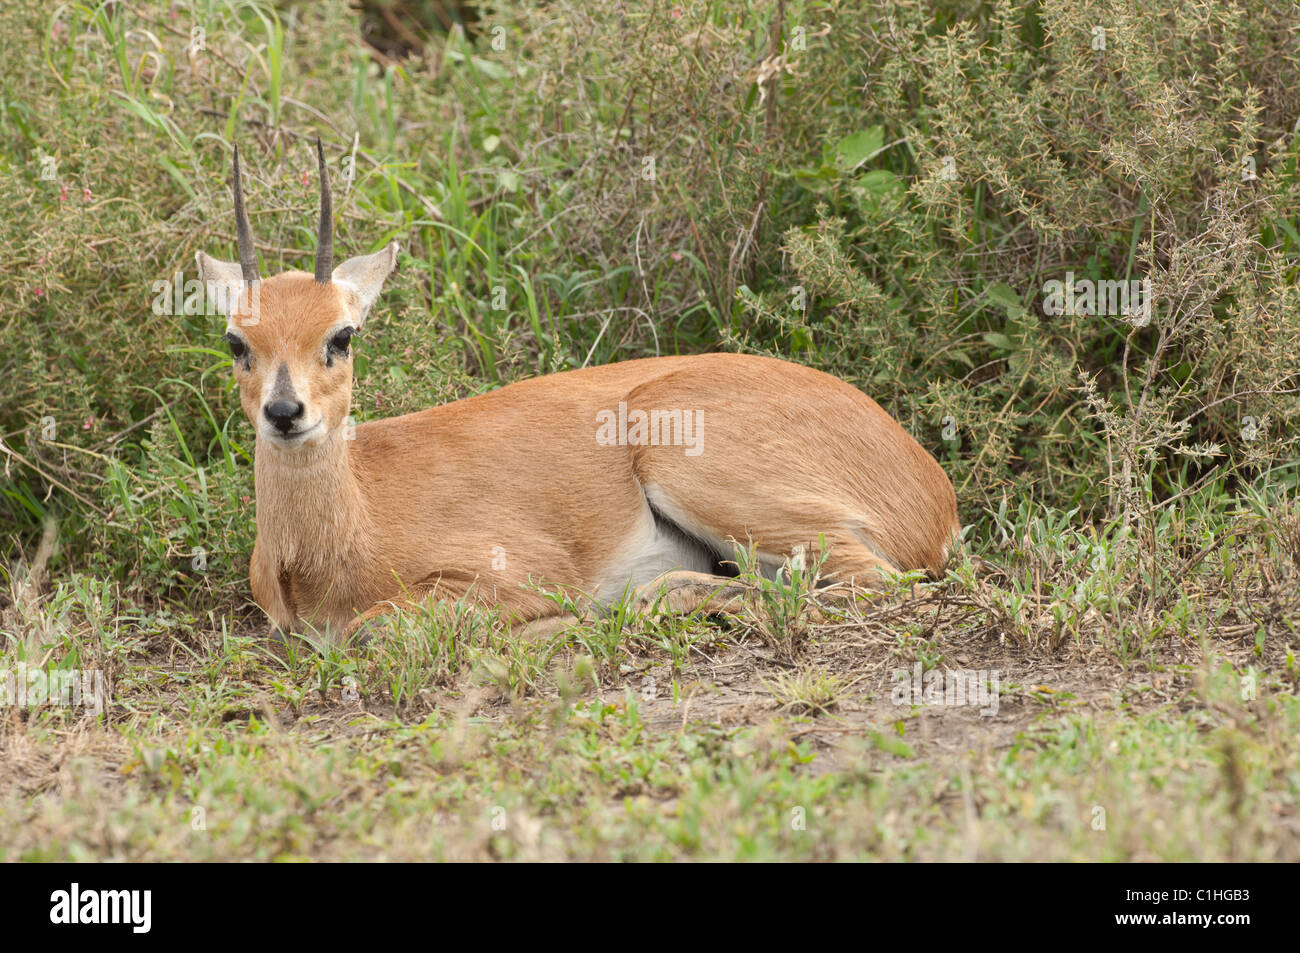 Male oribi resting near some brush. Stock Photo